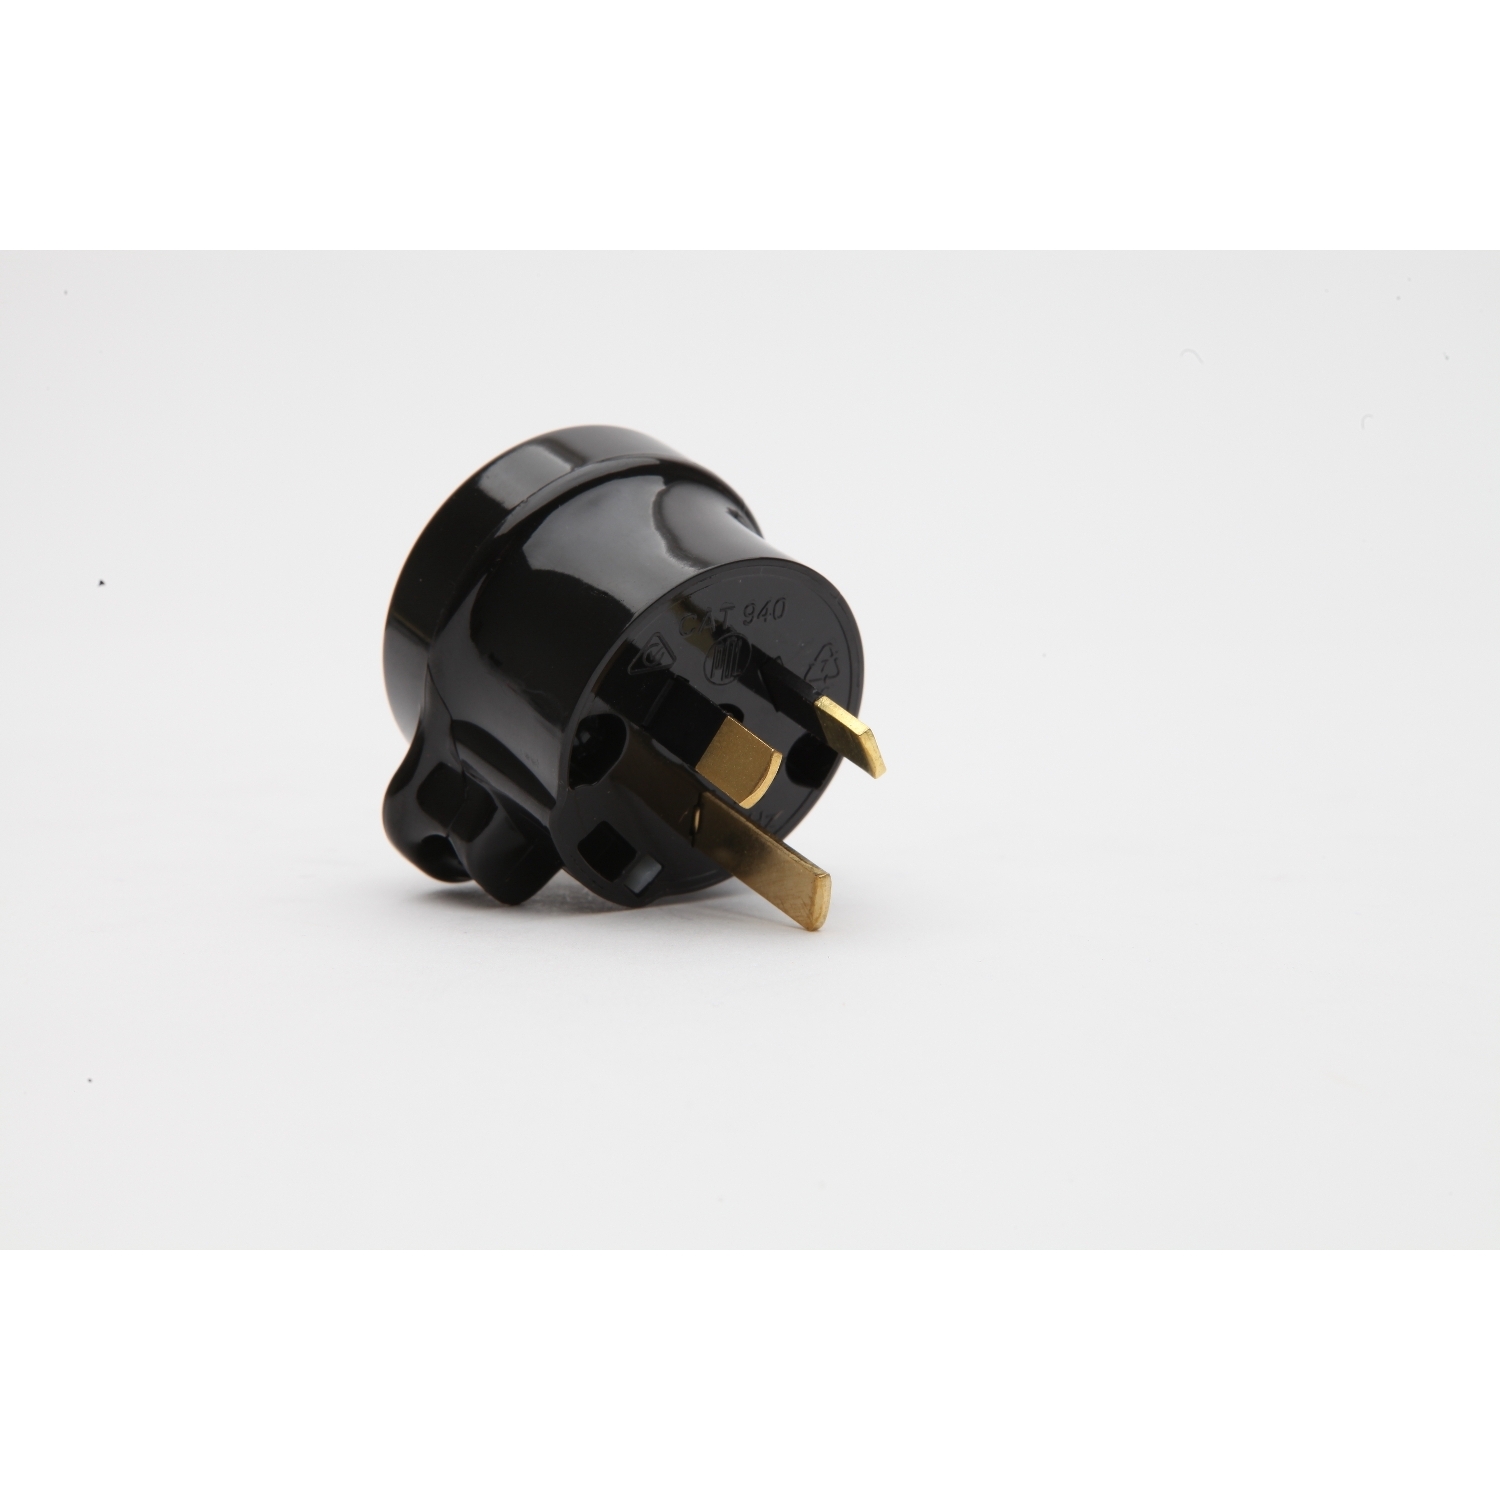 PDL 900 Series - Tapon Plug 10A Side-Entry 3-Pin Rewirable - Black